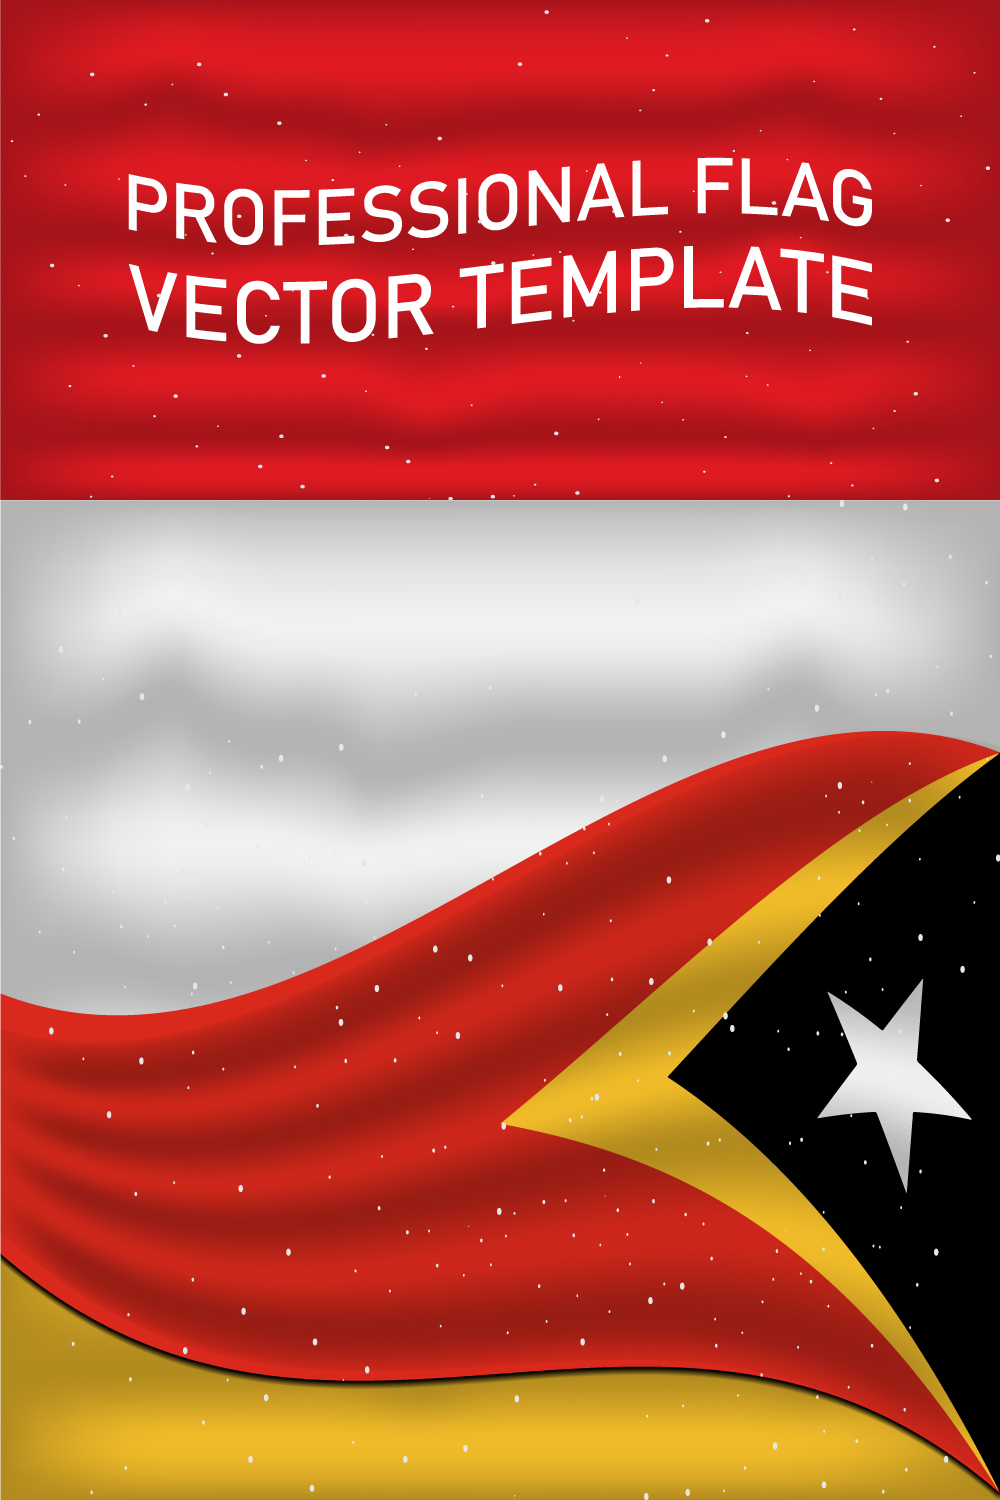 Amazing image of Timor-Leste flag.